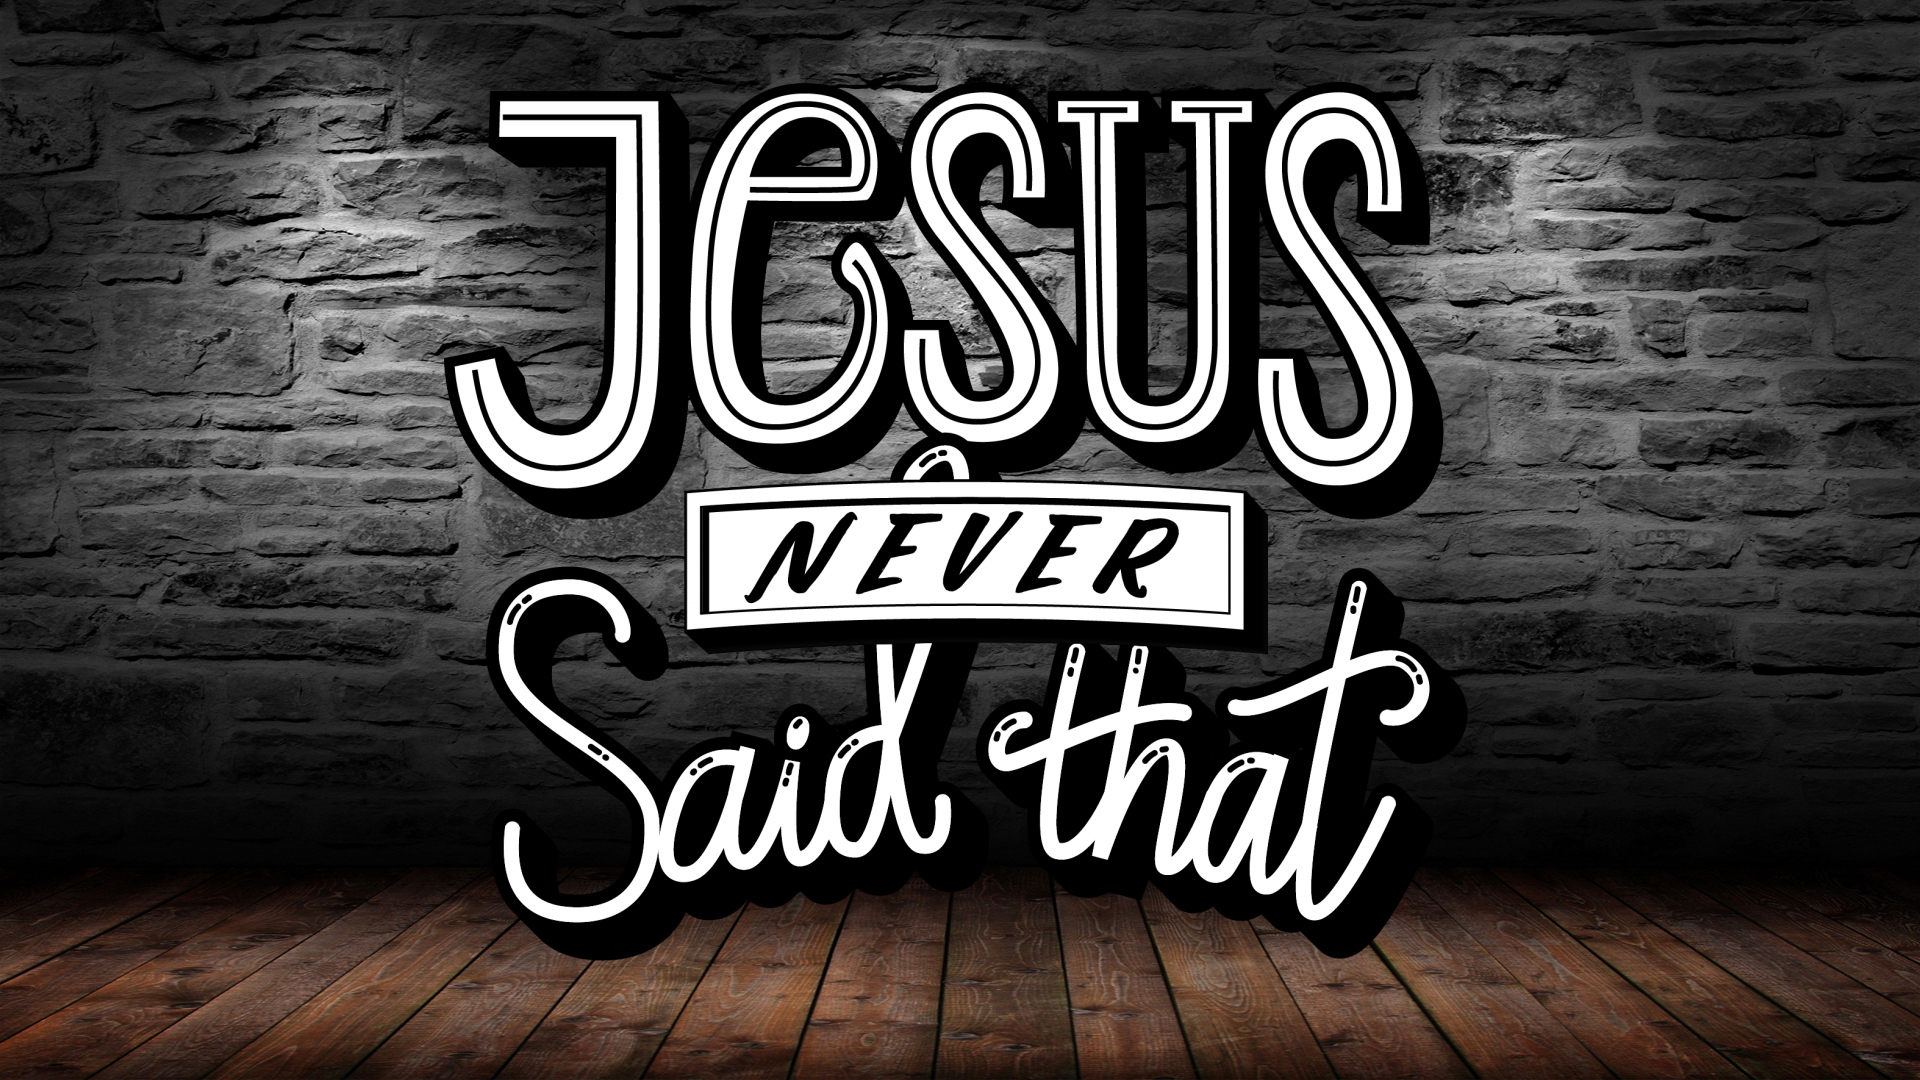 “Things Jesus never said: “Too far gone”